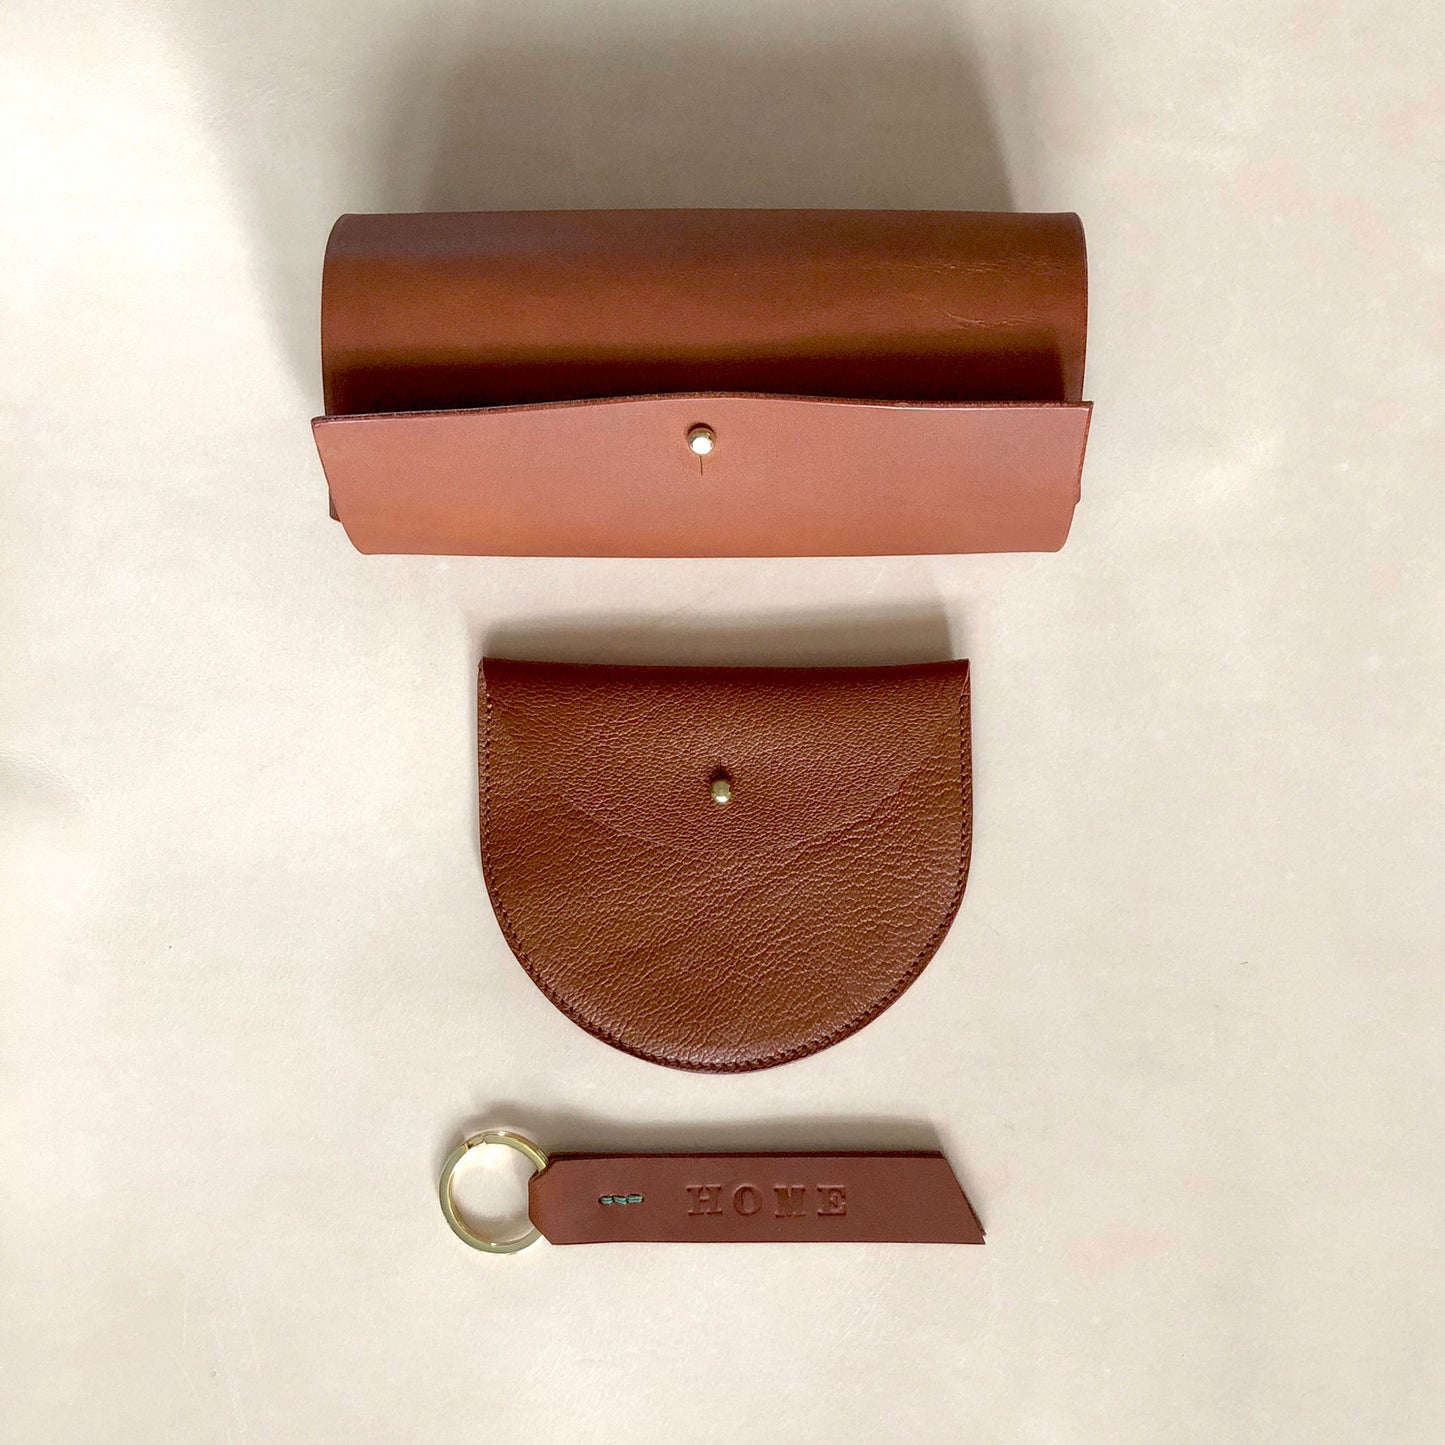 Handmade leather purse - Tan